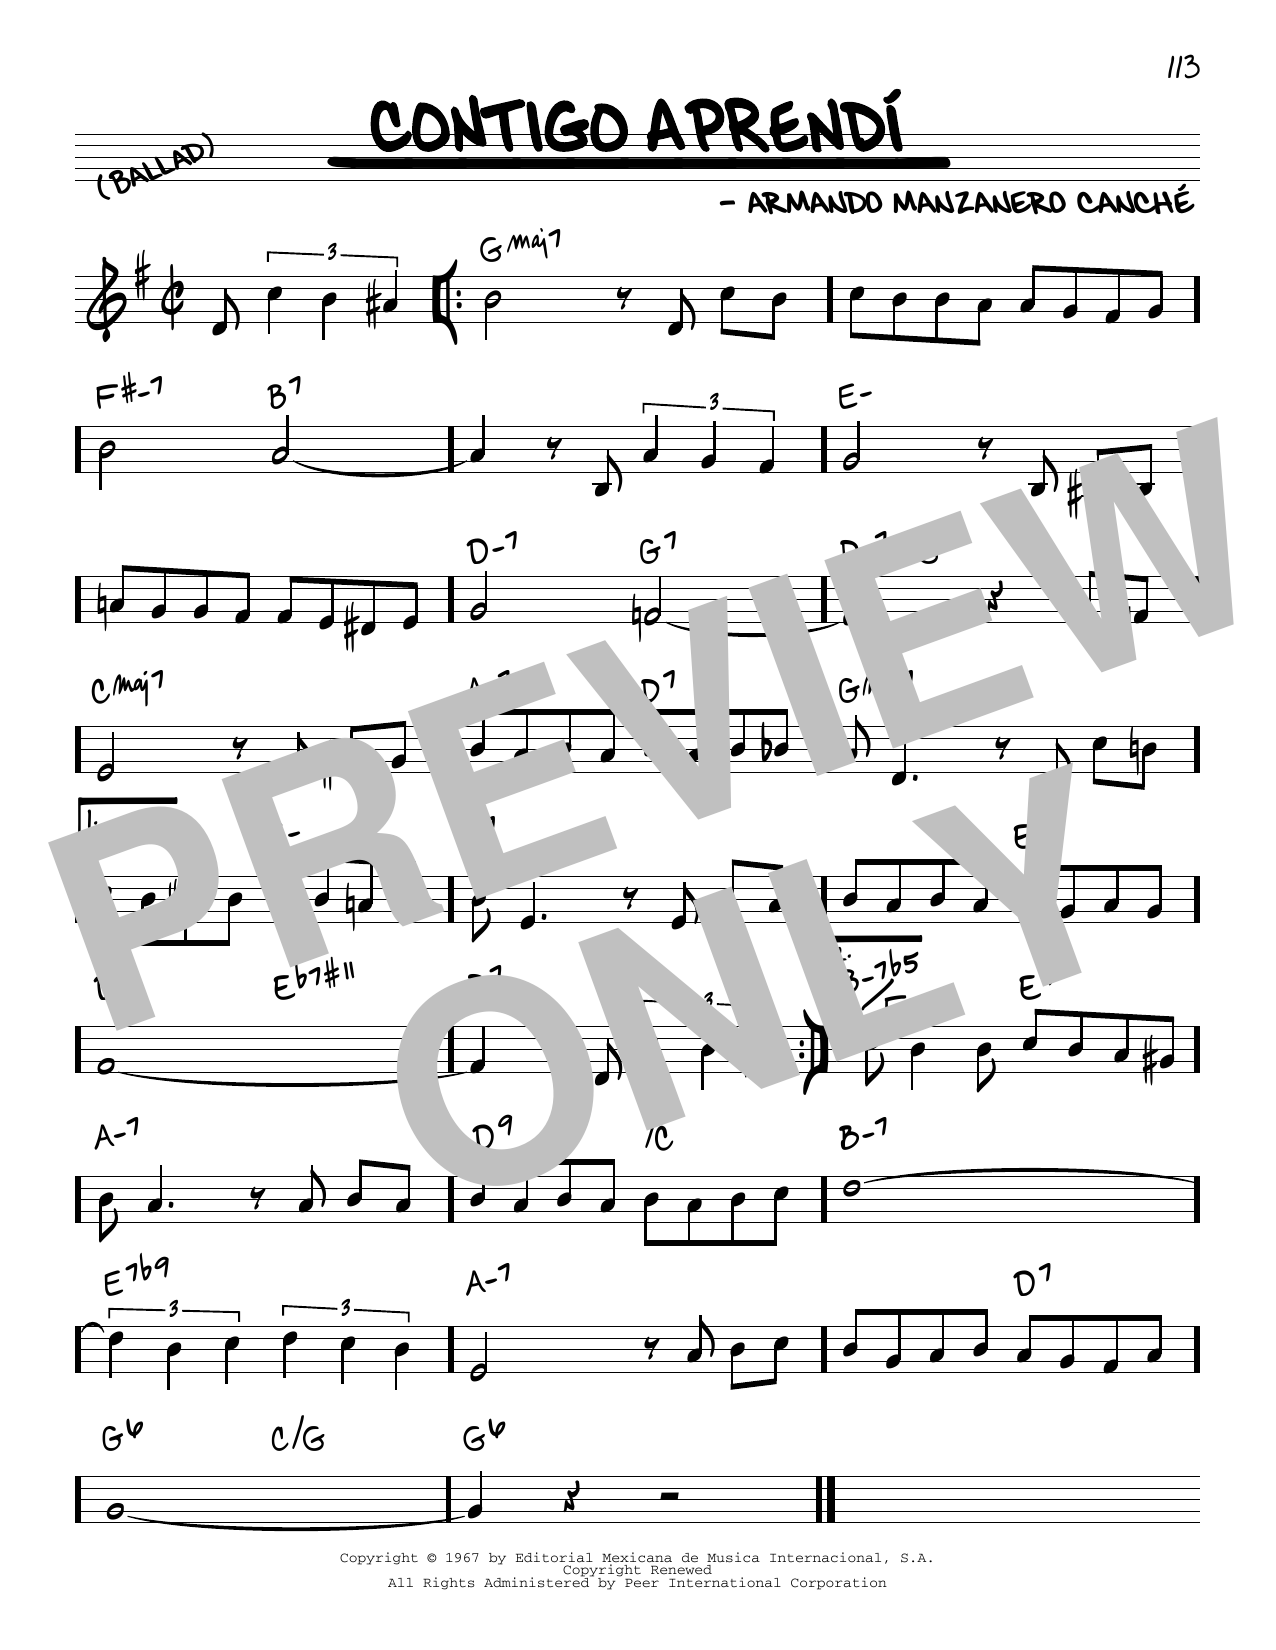 Download Armando Manzanero Canche Contigo Aprendi Sheet Music and learn how to play Real Book – Melody & Chords PDF digital score in minutes